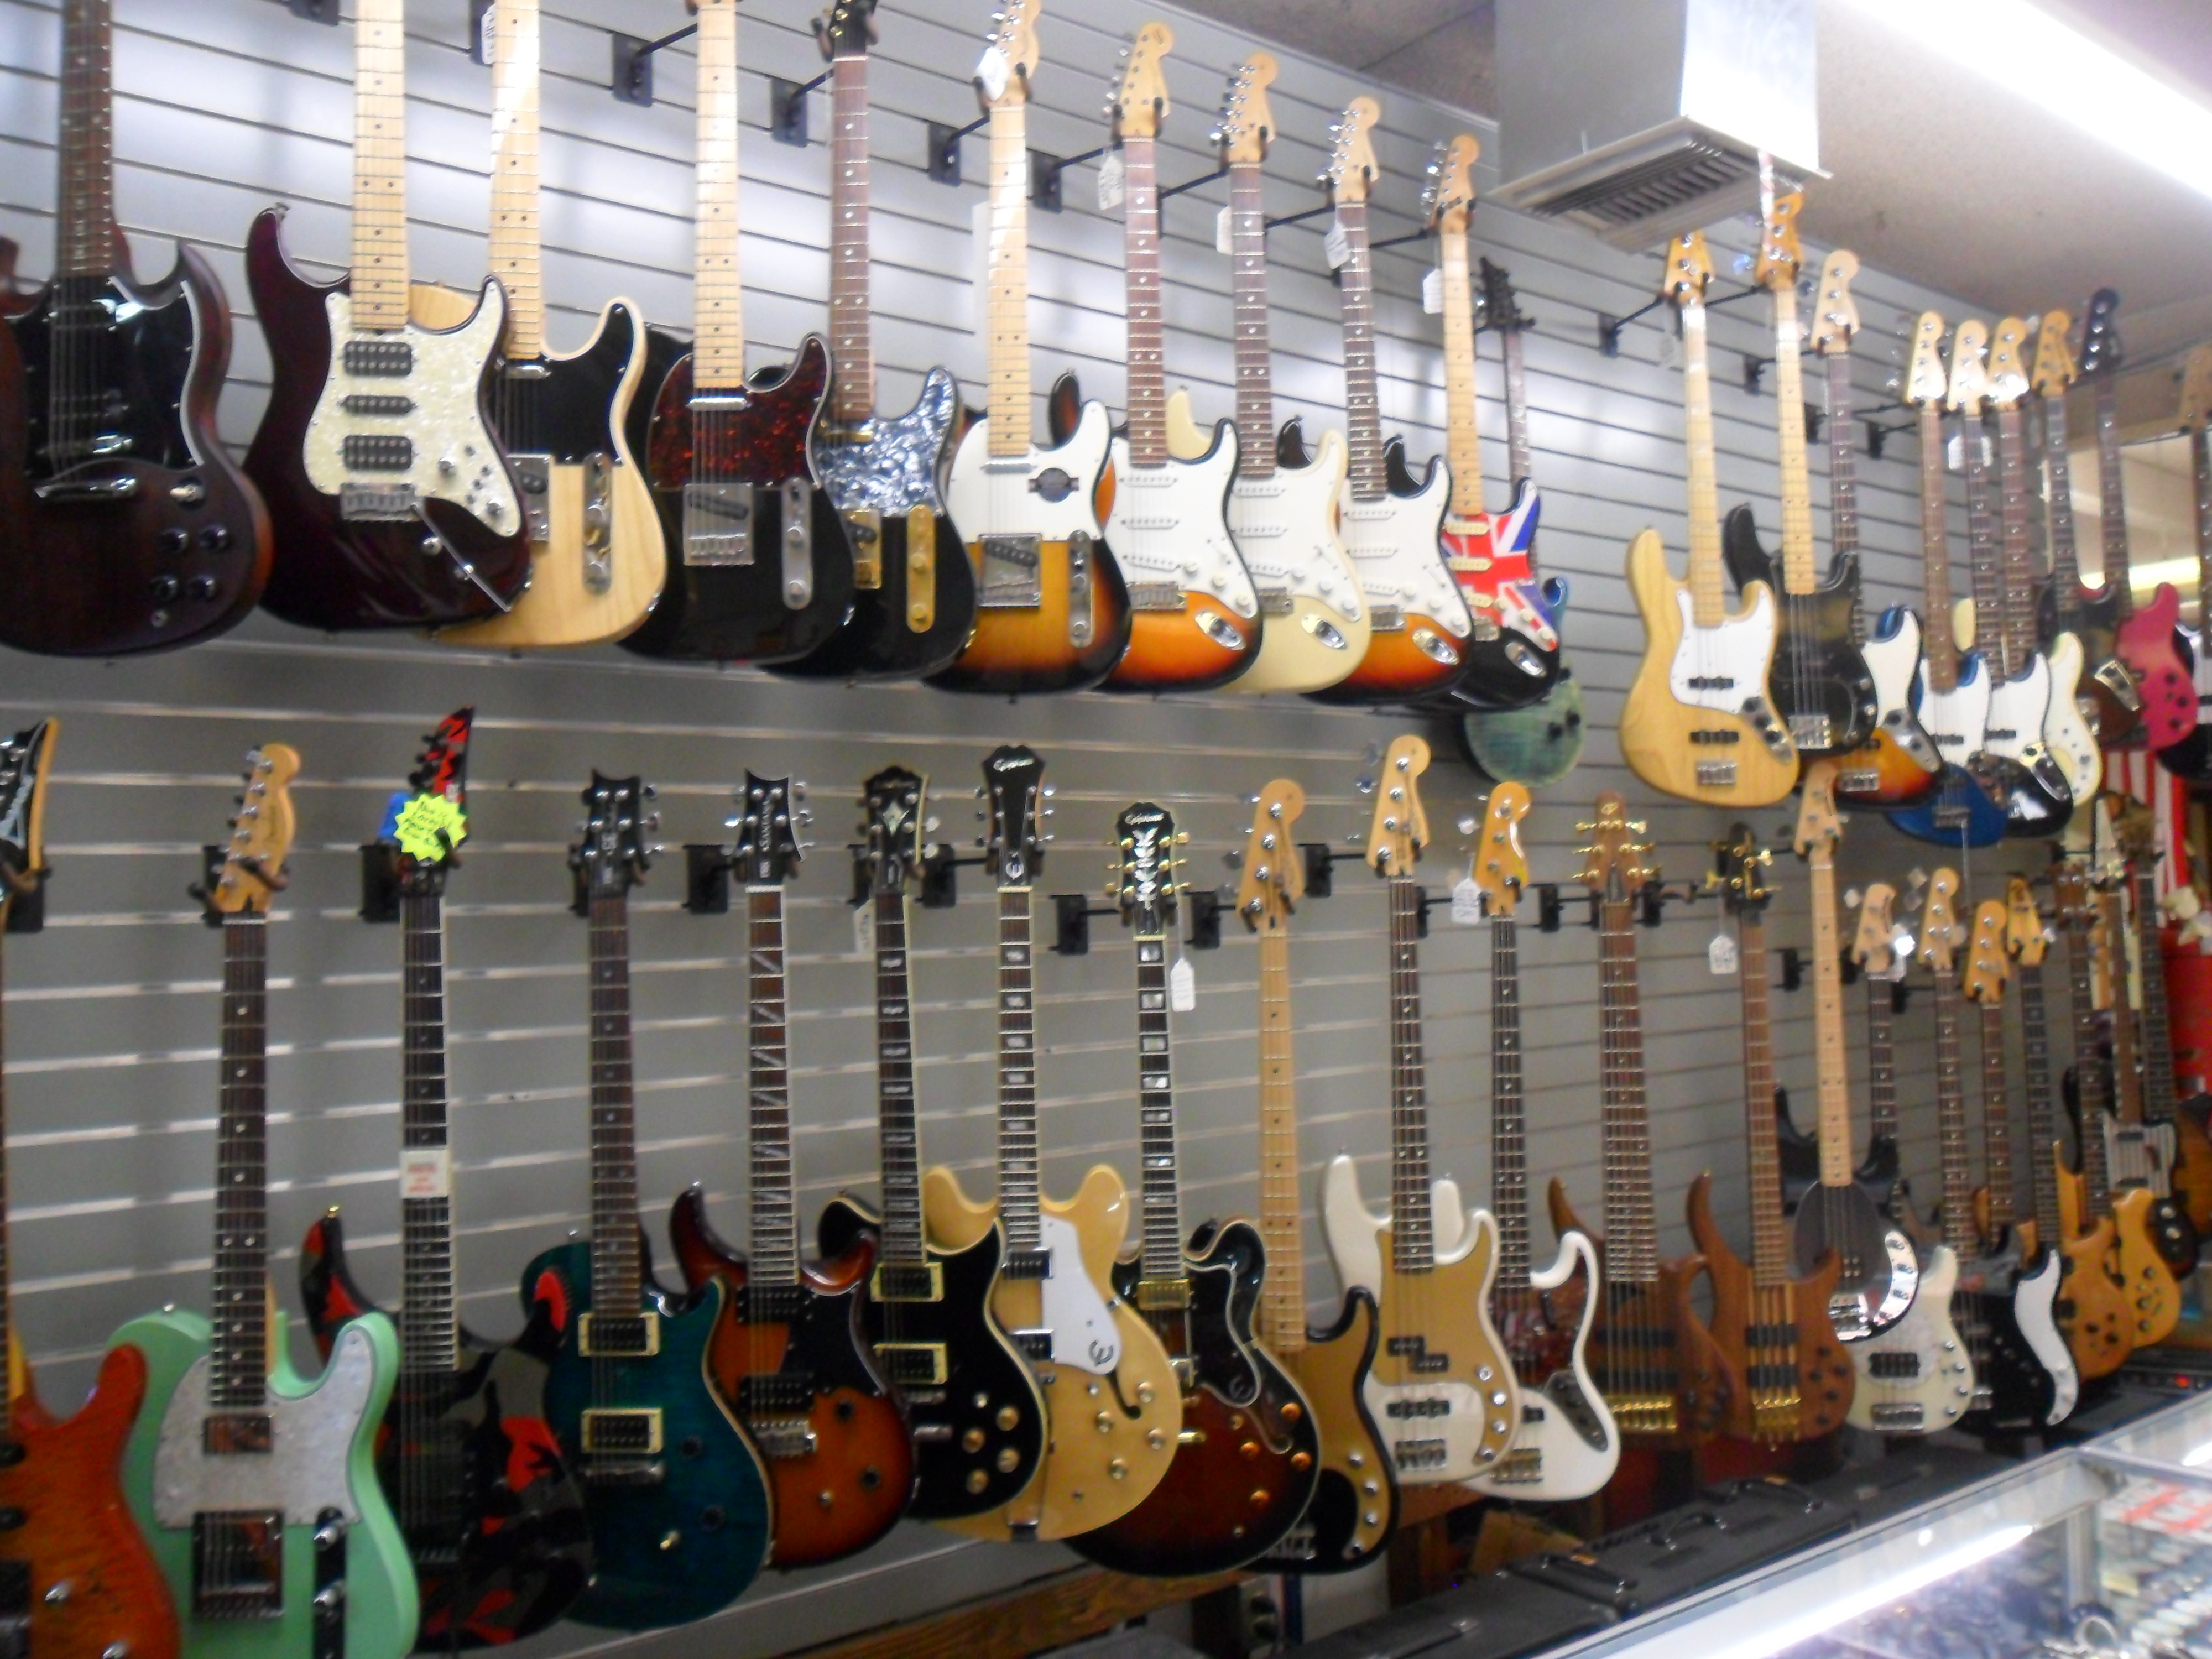 A wall of guitars at A&V Pawn Shop.